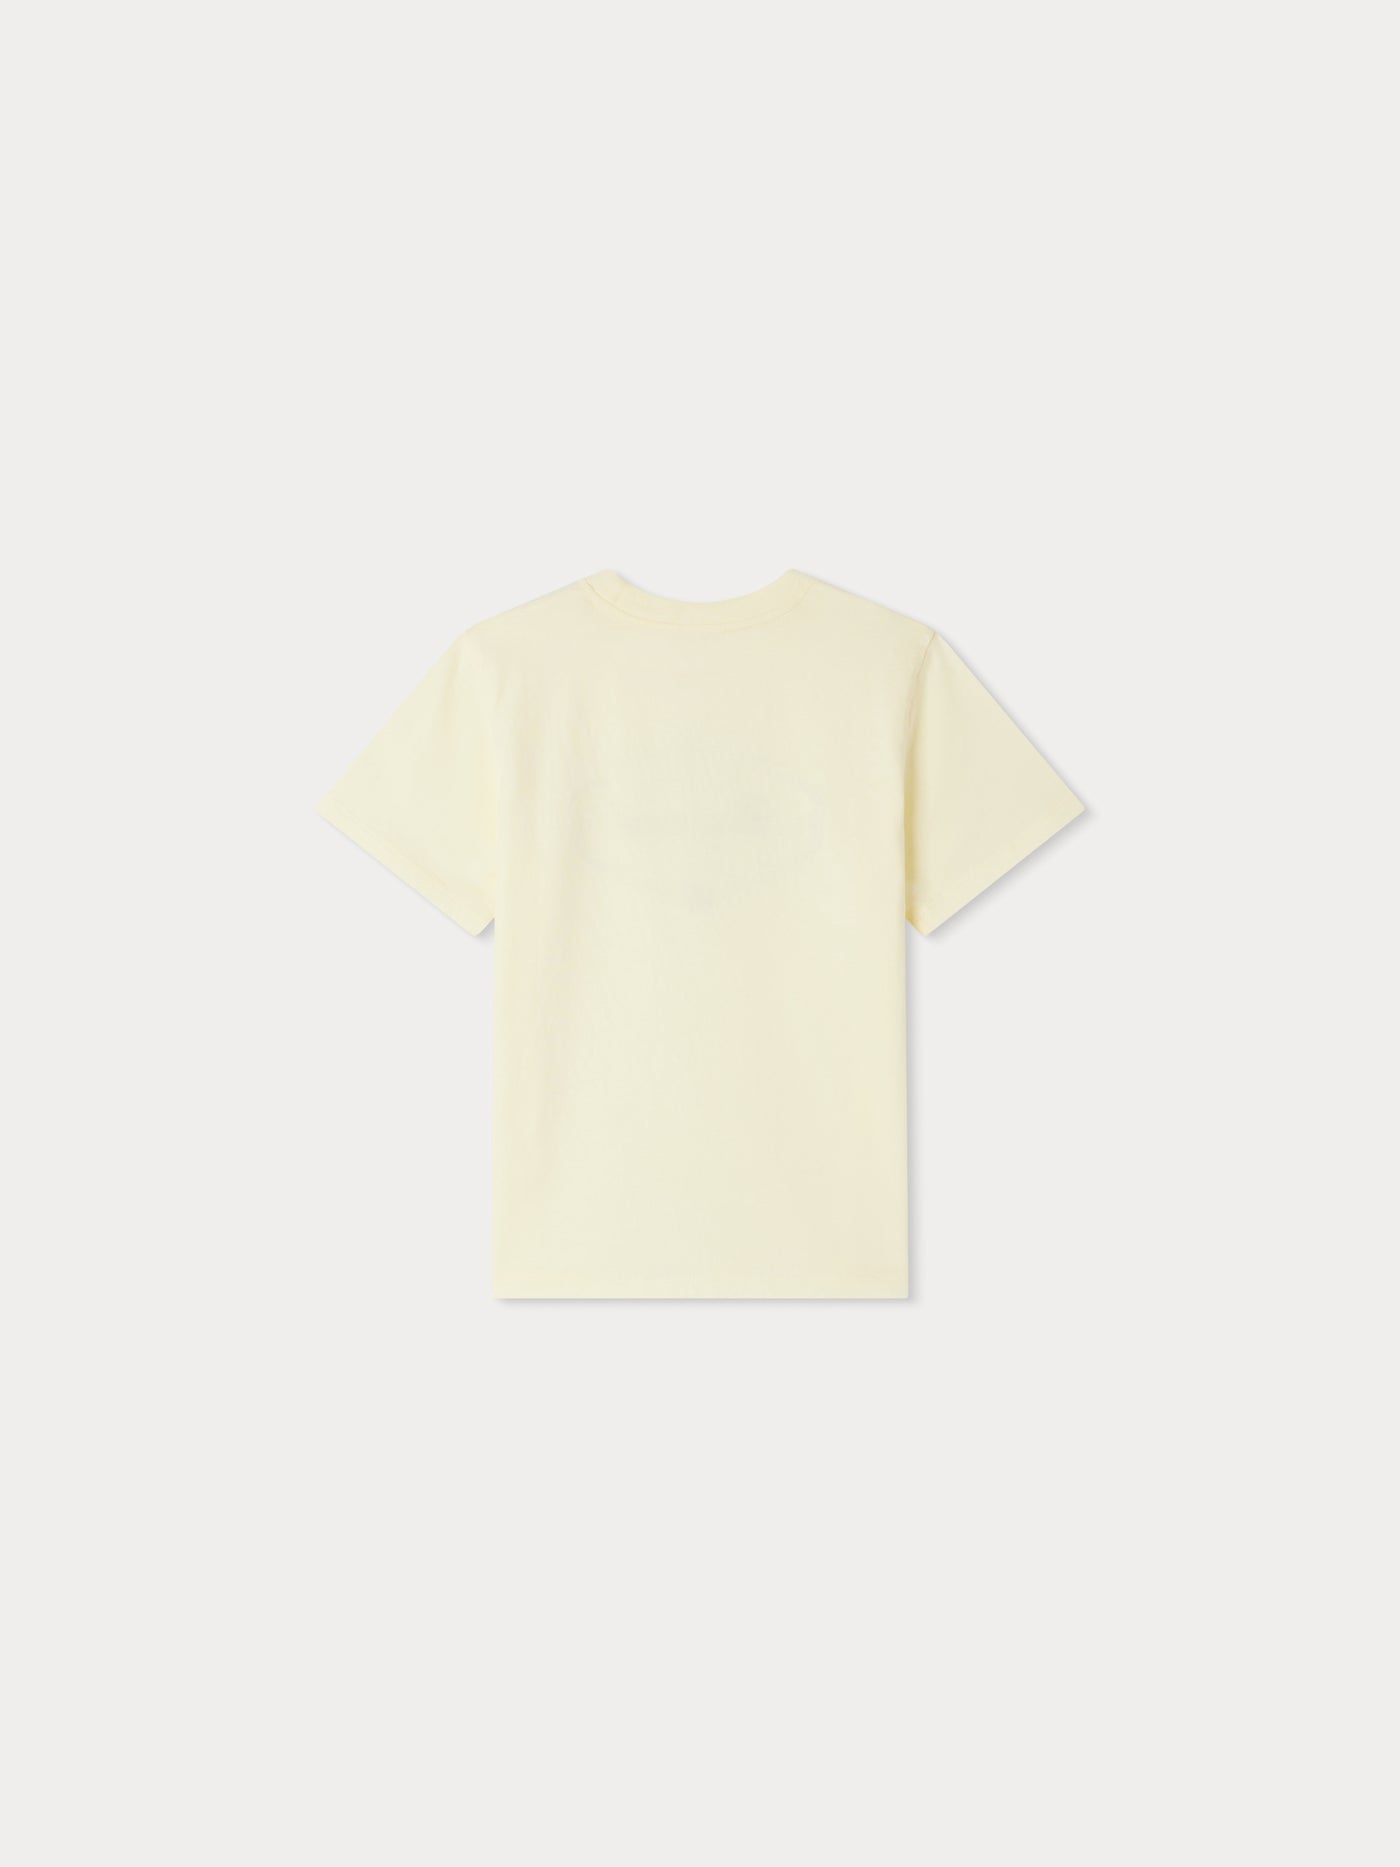 Thida T-Shirt gelb